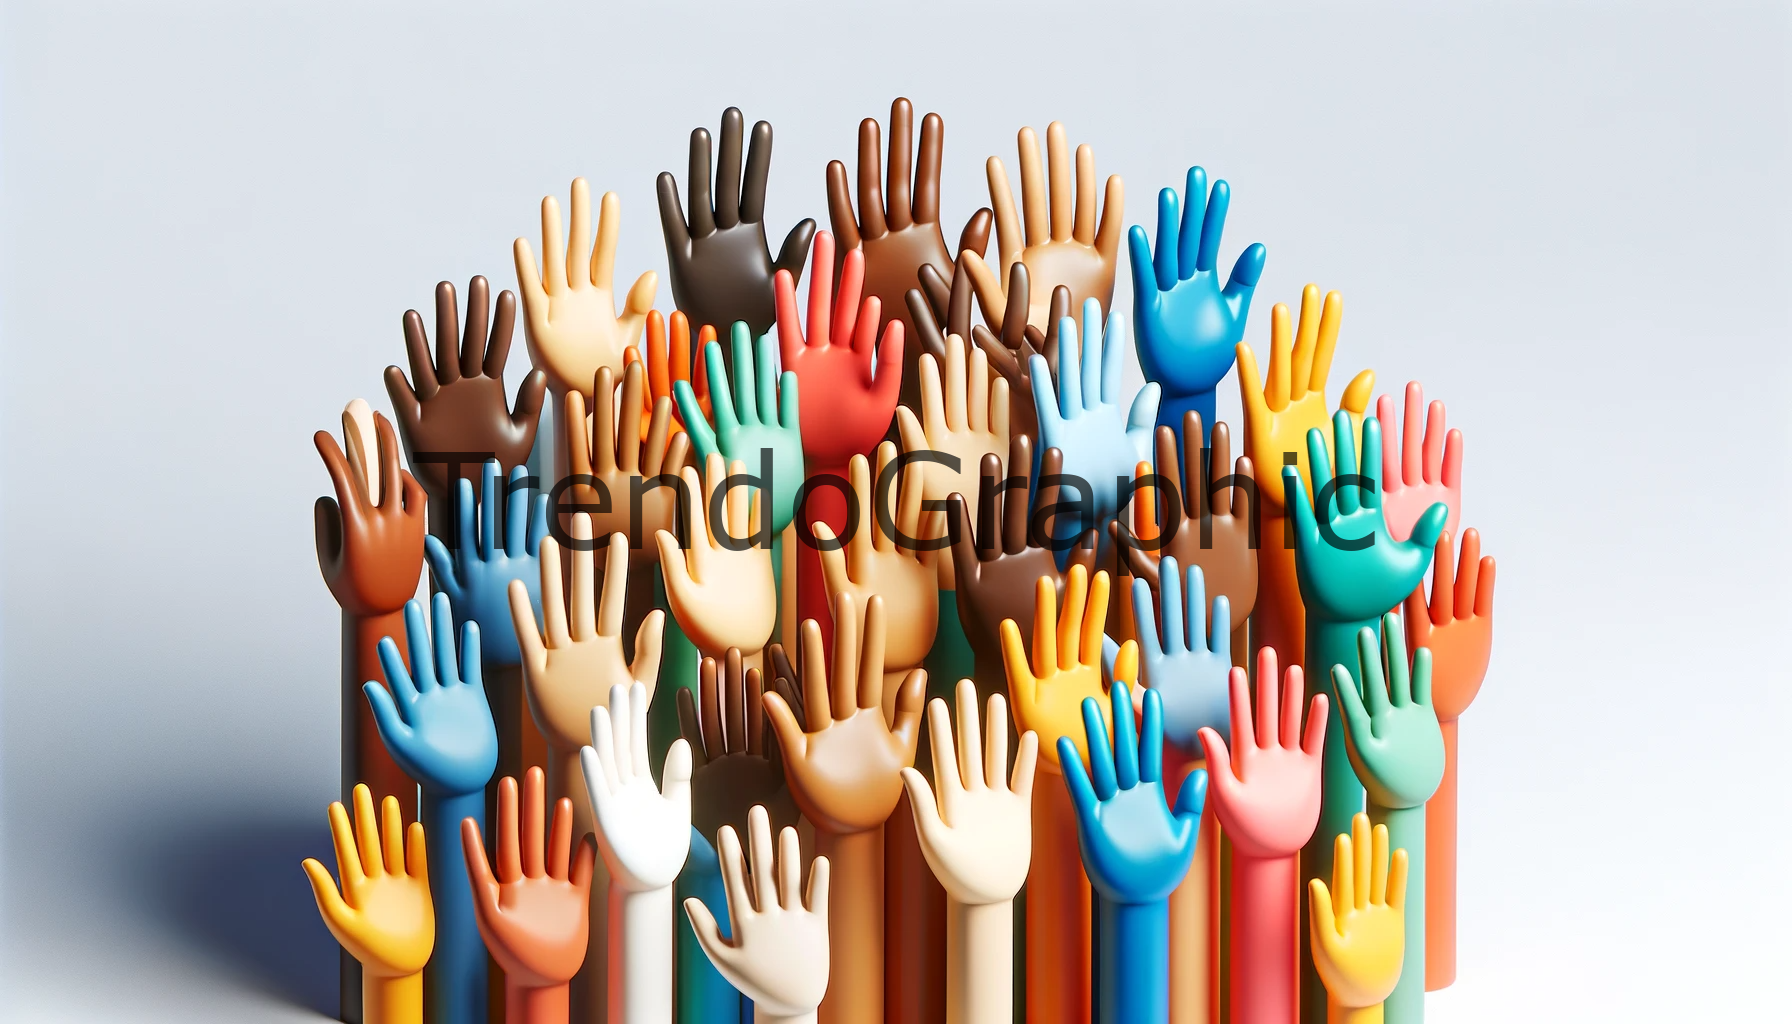 Diversity Hands in Harmony